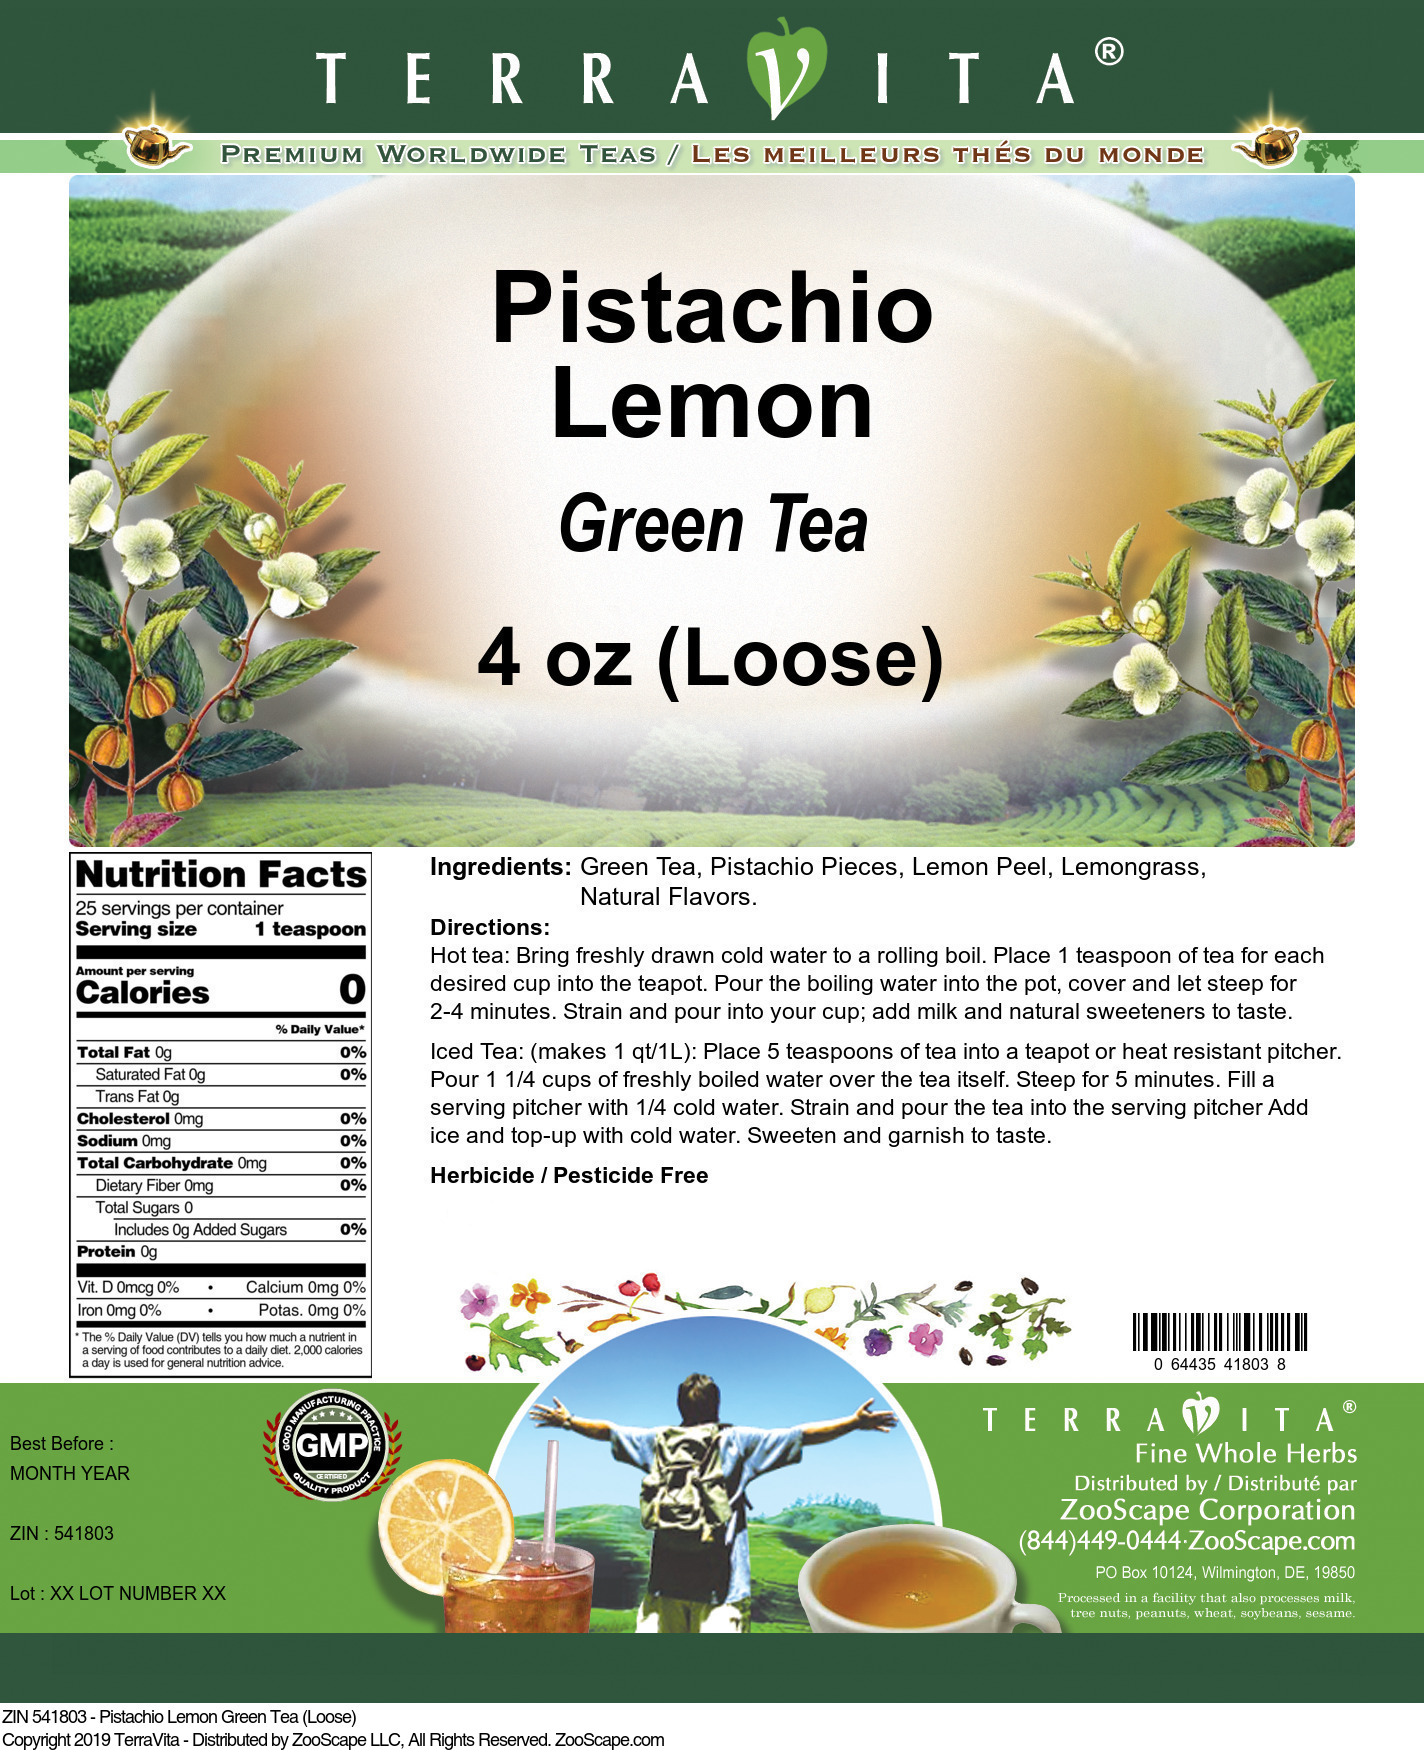 Pistachio Lemon Green Tea (Loose) - Label